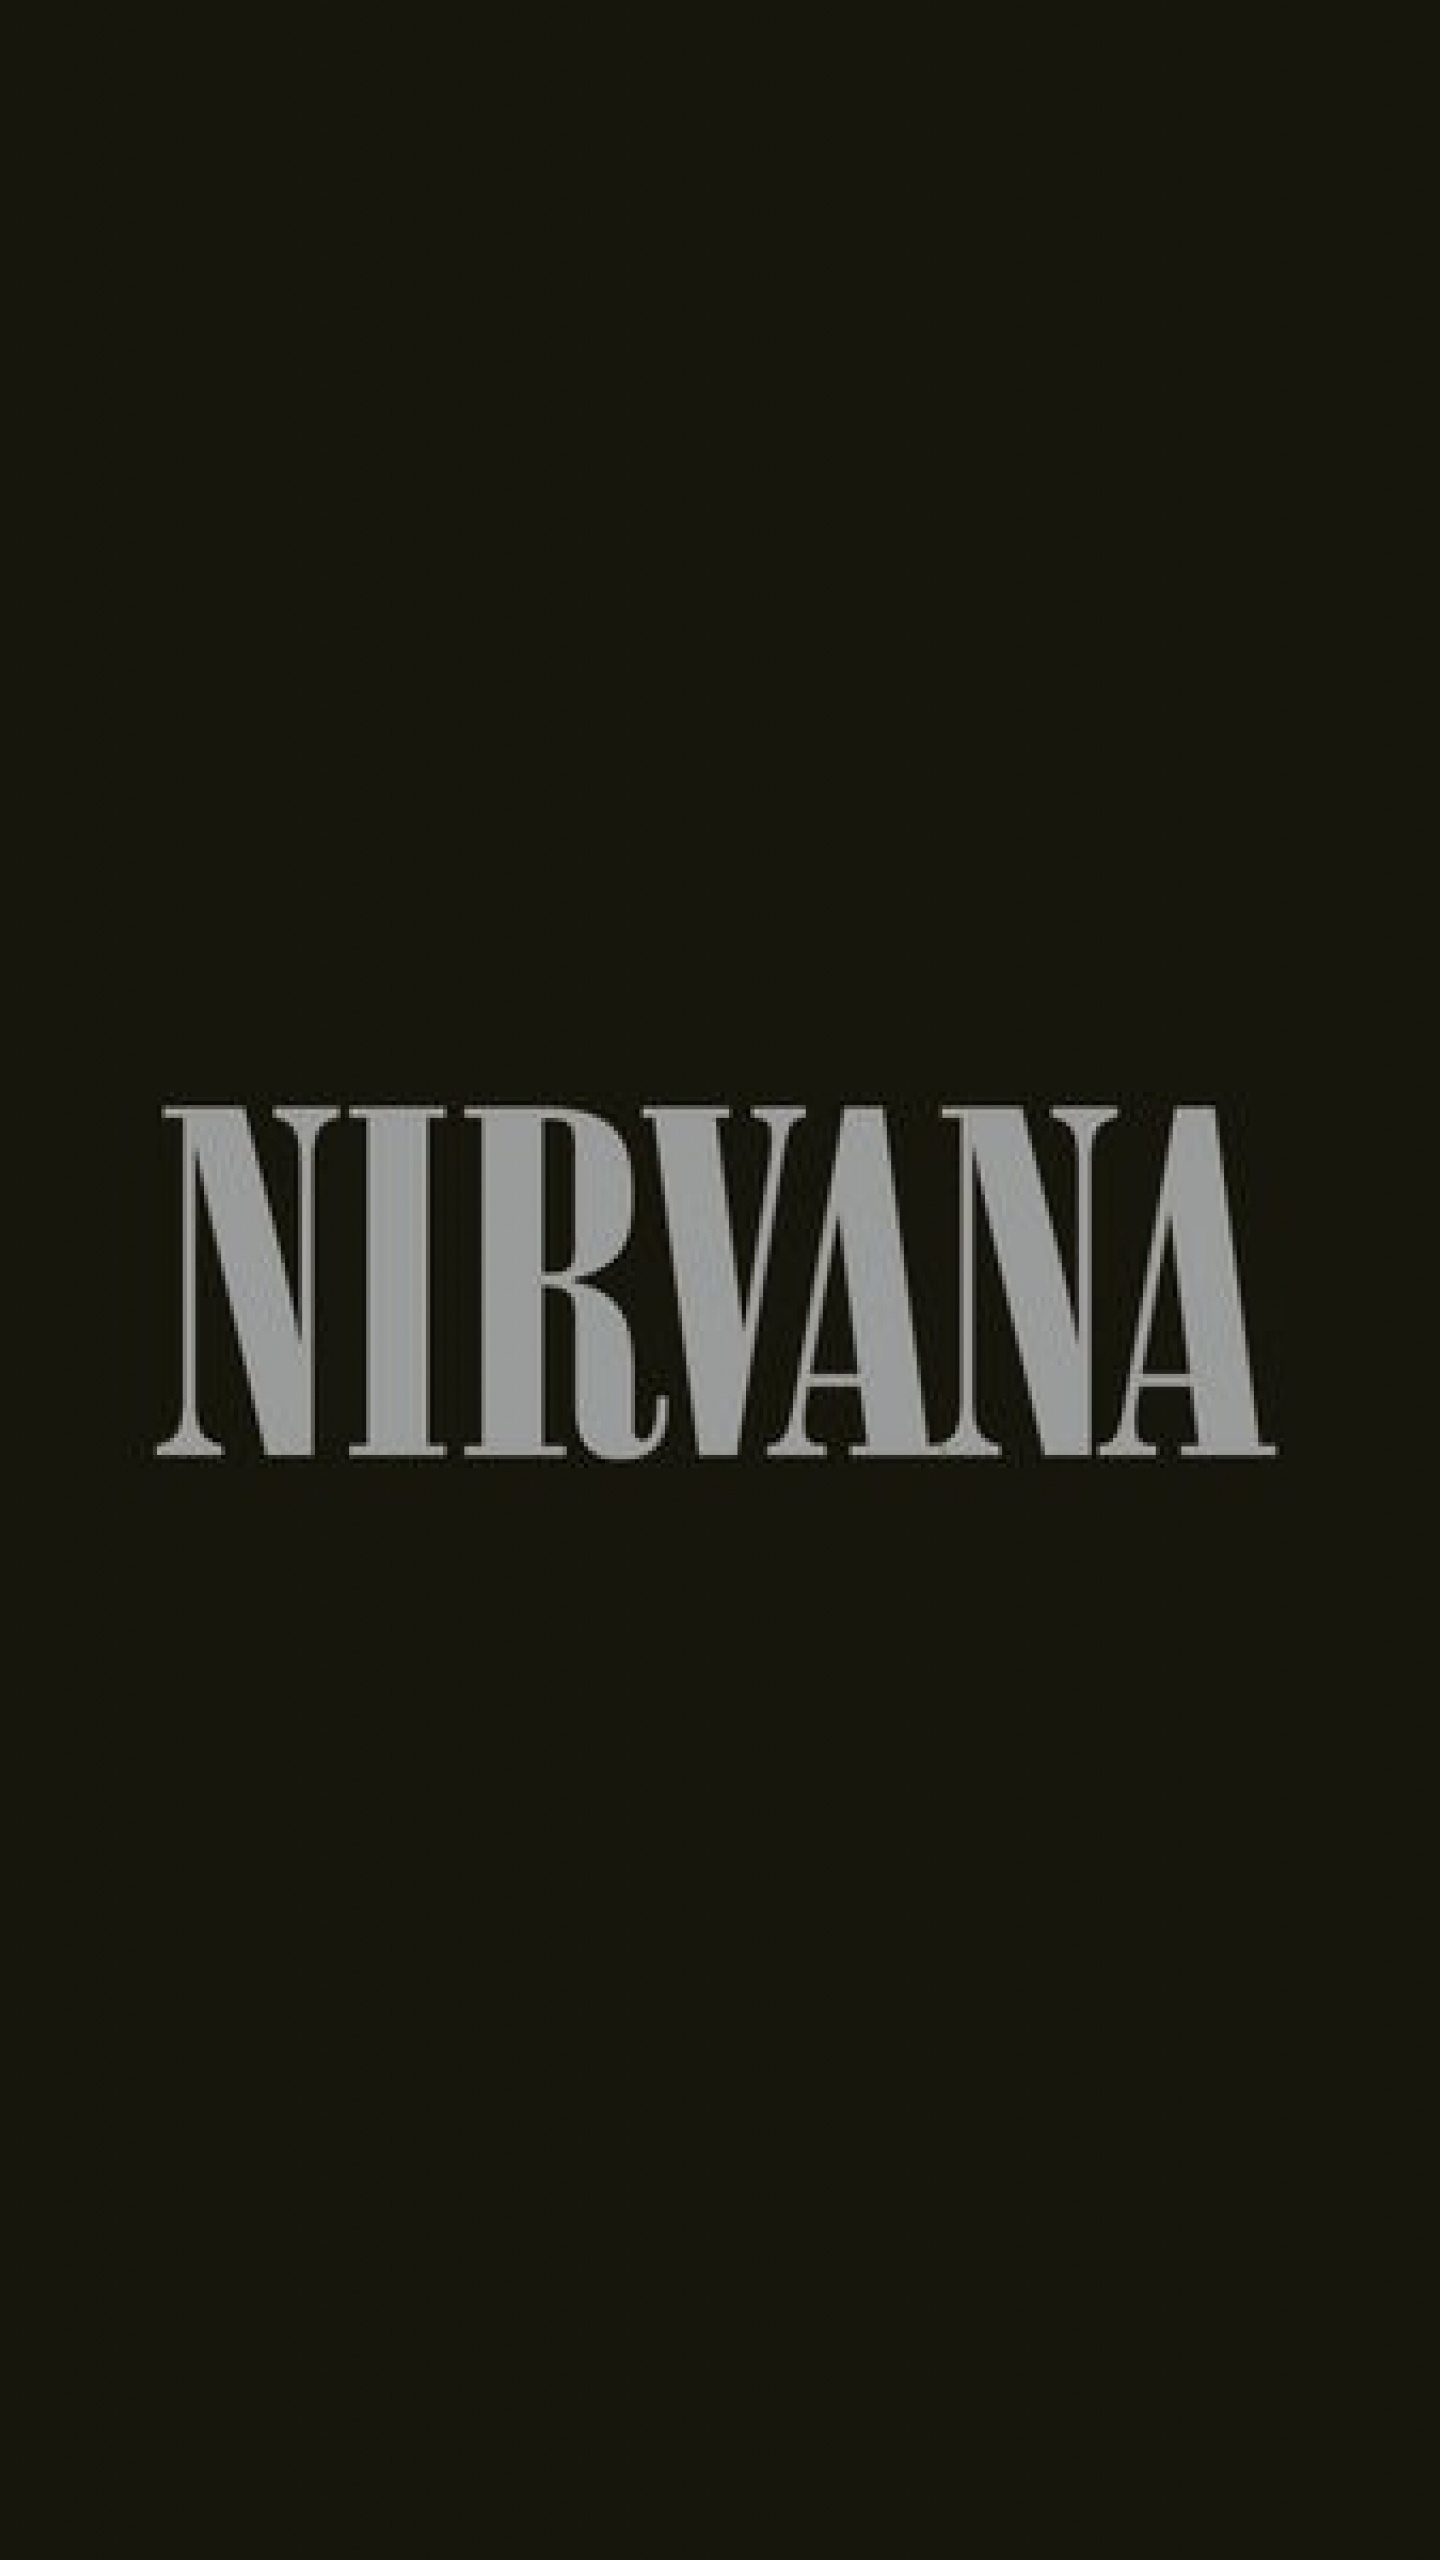 Nirvana, Album, Graphisme, Texte, Noir. Wallpaper in 1440x2560 Resolution